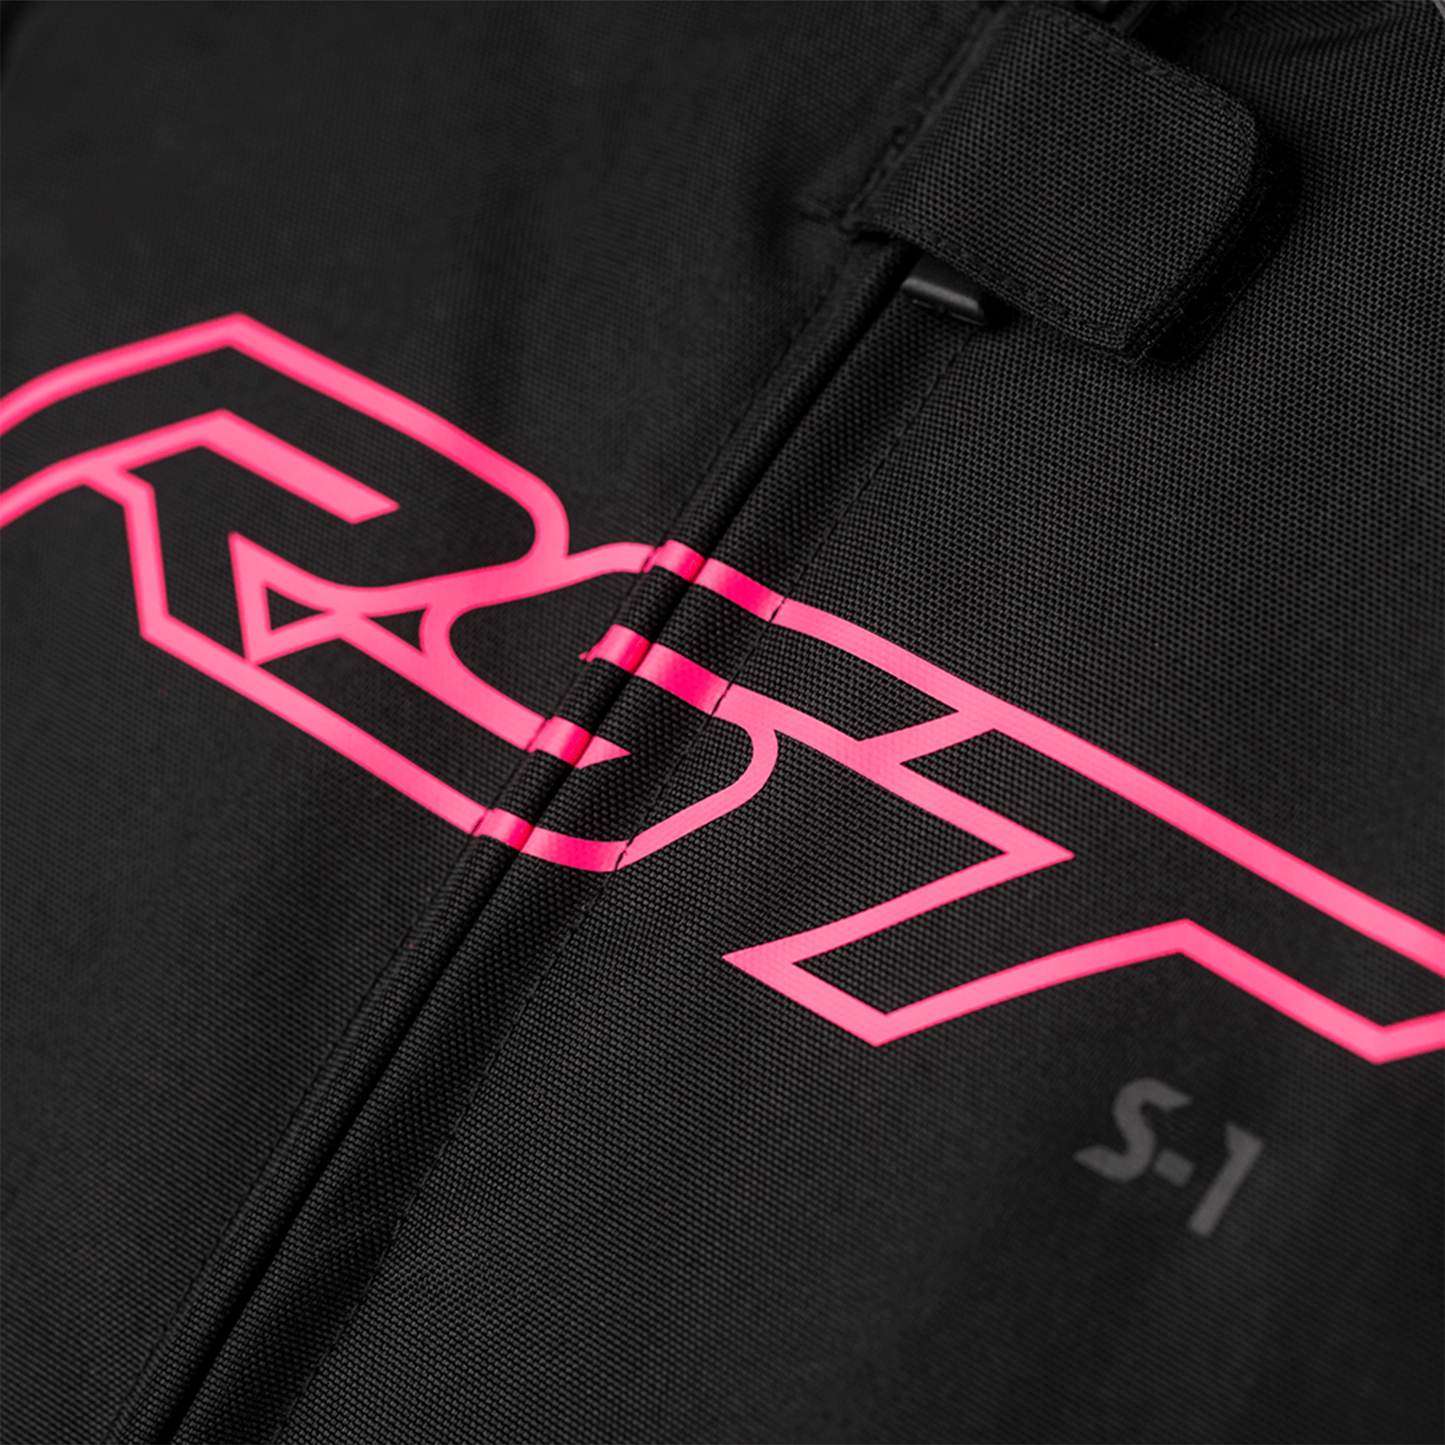 RST S1 Mesh Textile Ladies Jacket - Black/Neon Pink